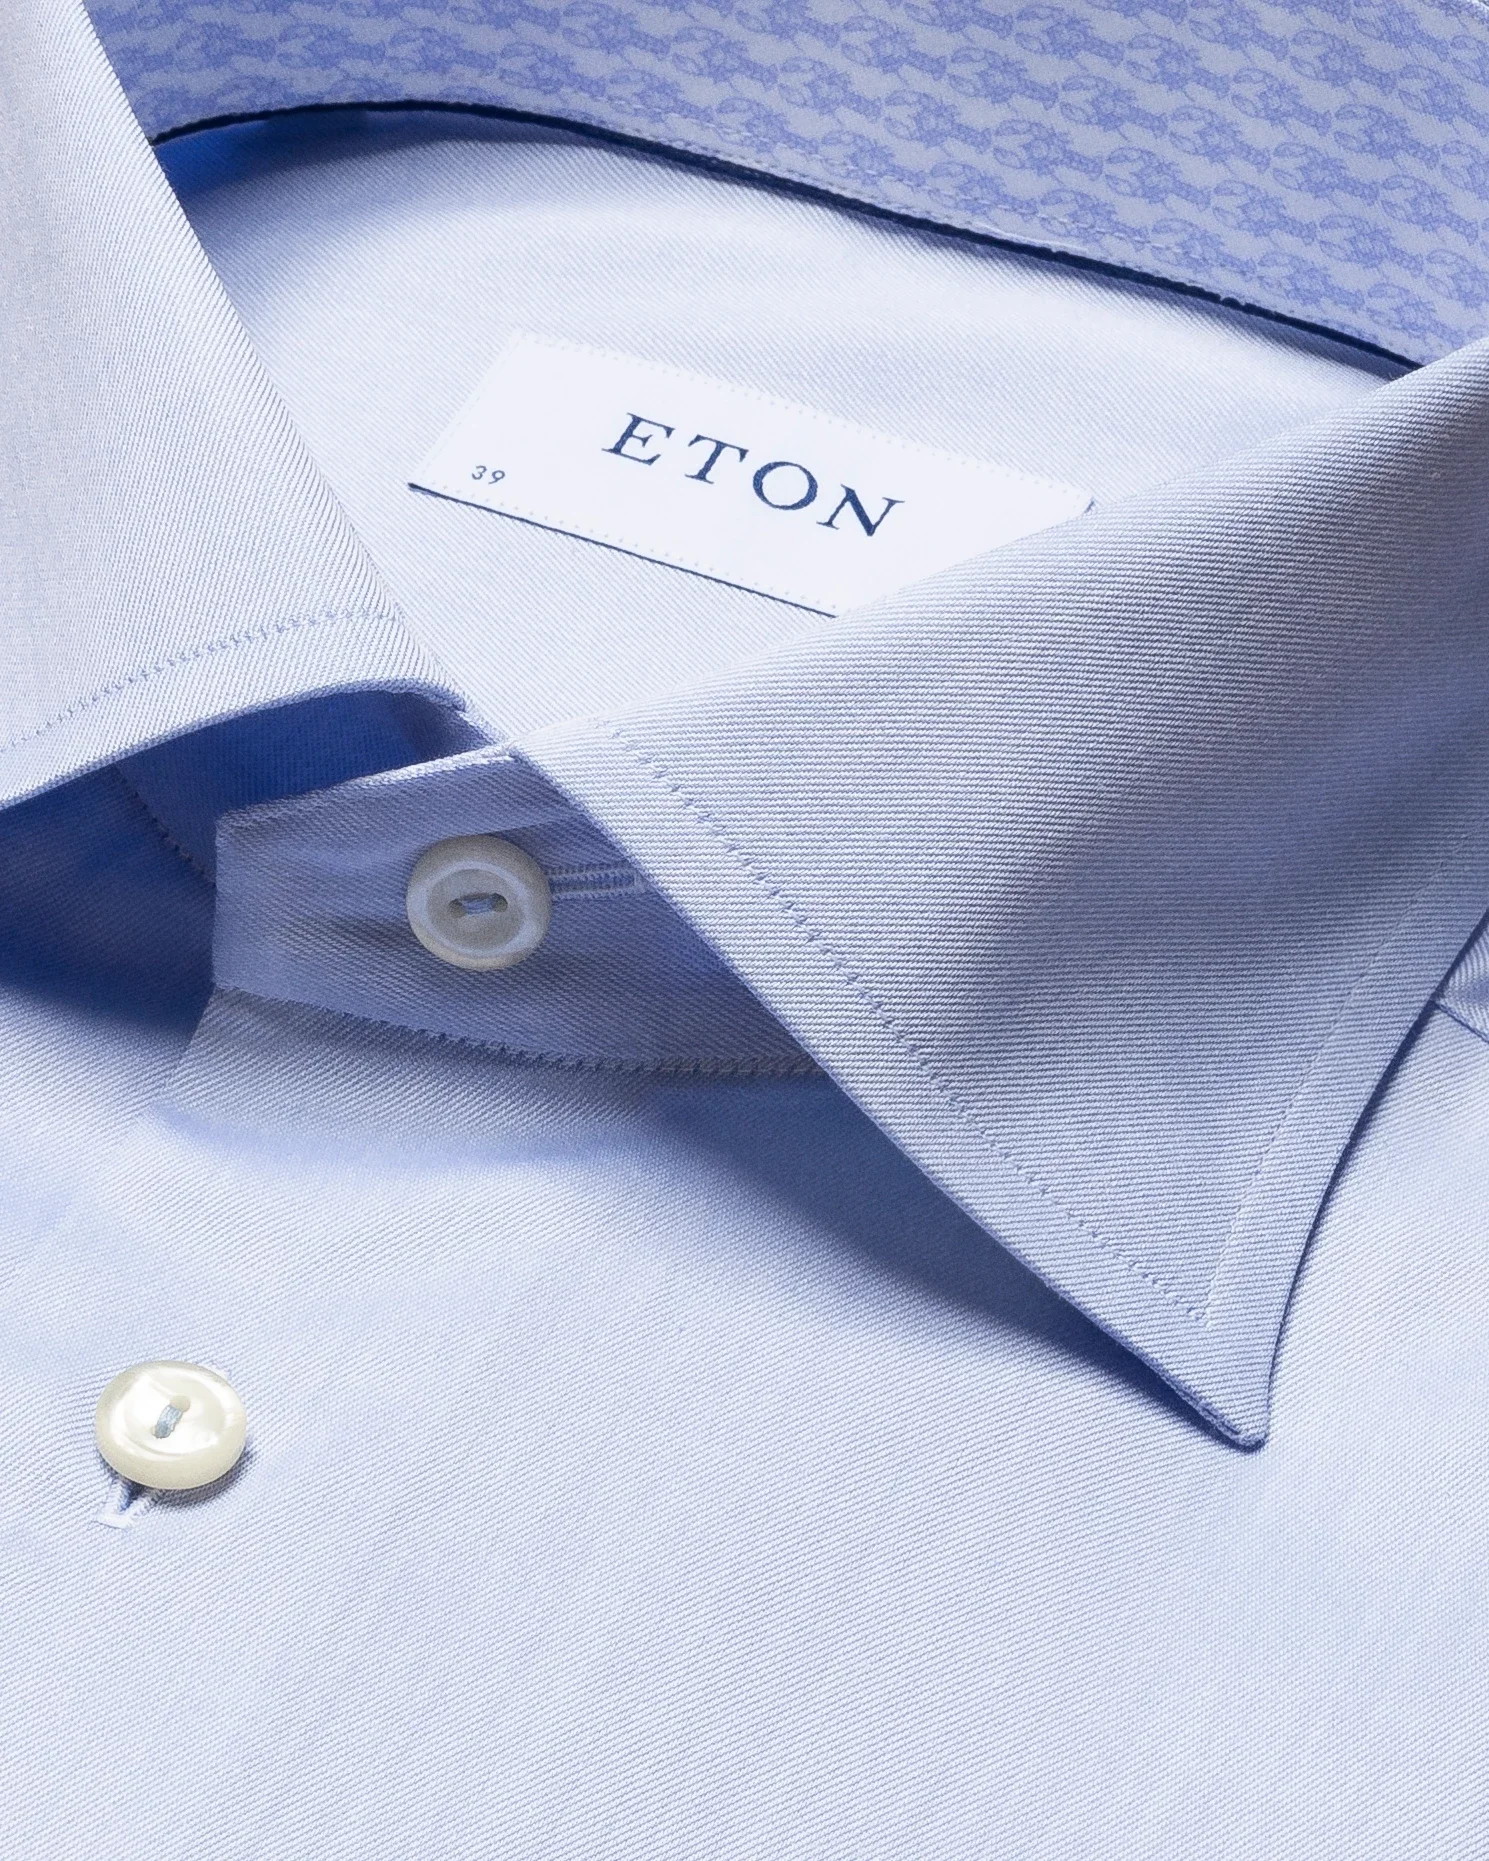 Eton - light blue signature twill shirt printed details cut away